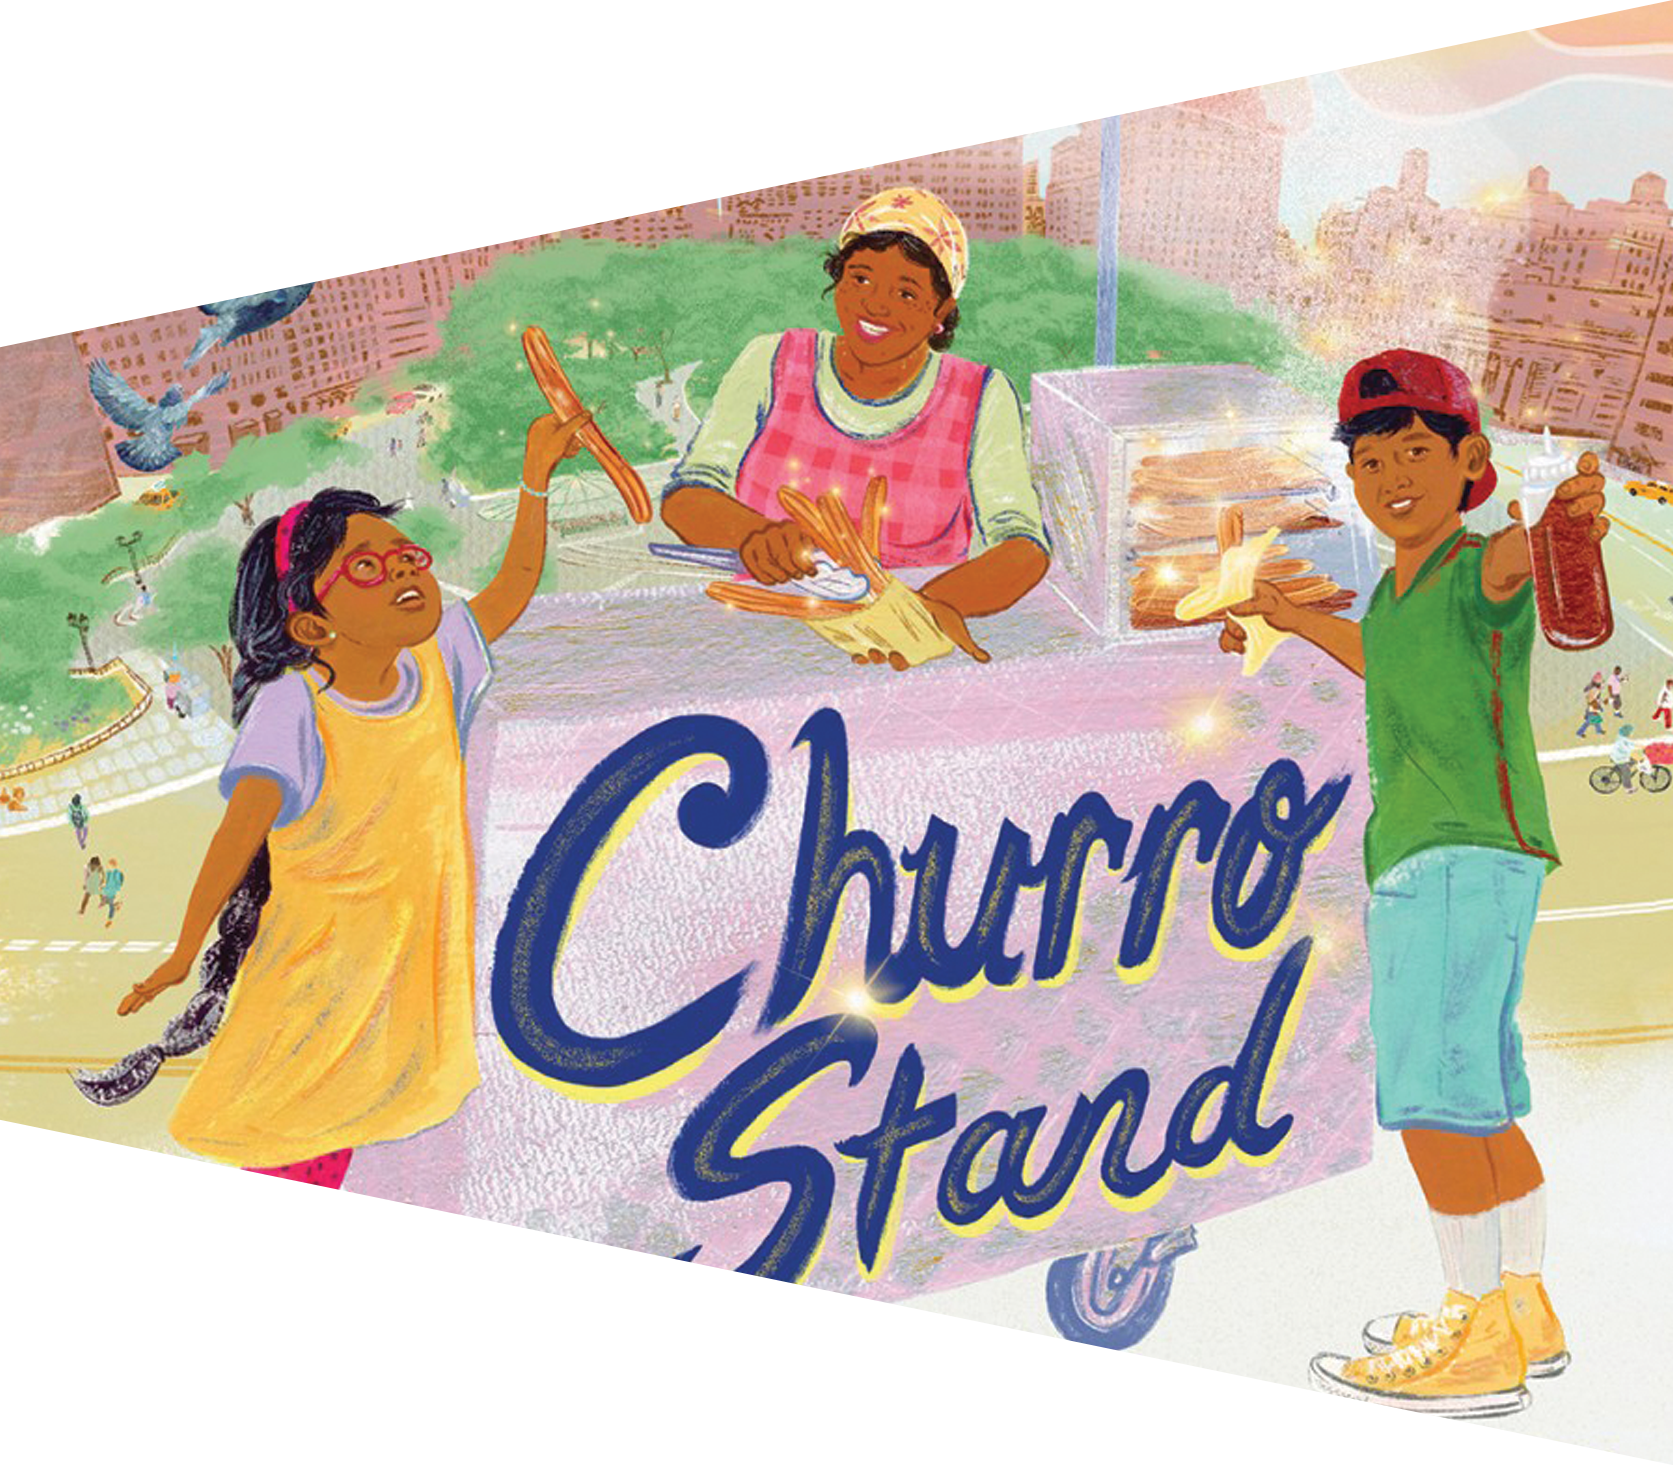 La Meriendita Story Hour: Churro Stand by Karina González